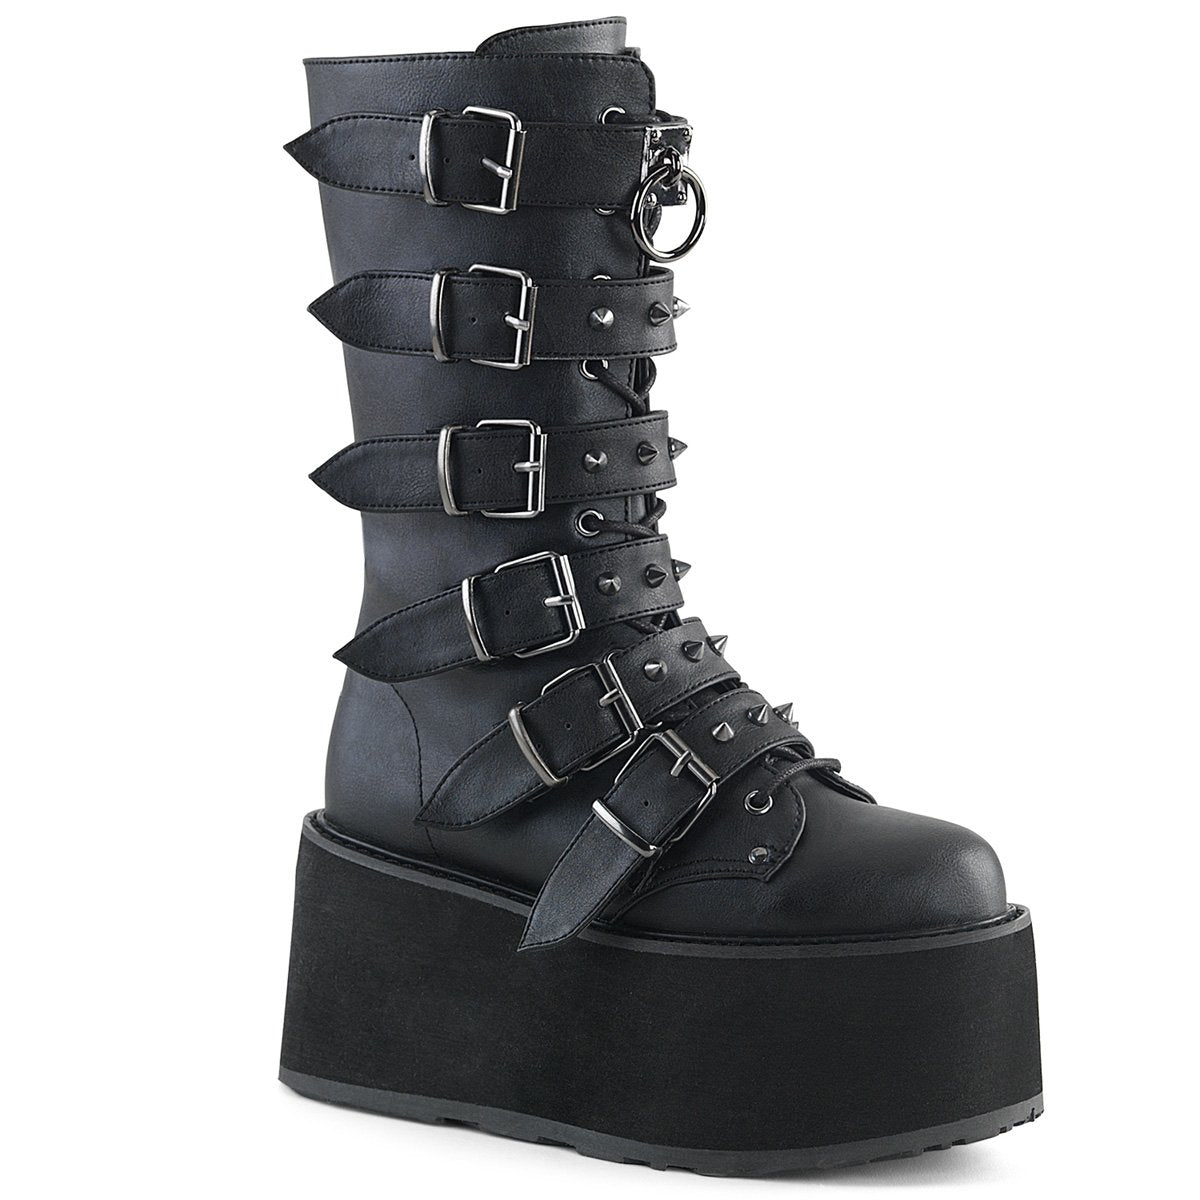 Demonia Damned 225 Boots Black Vegan Leather Goth Mall